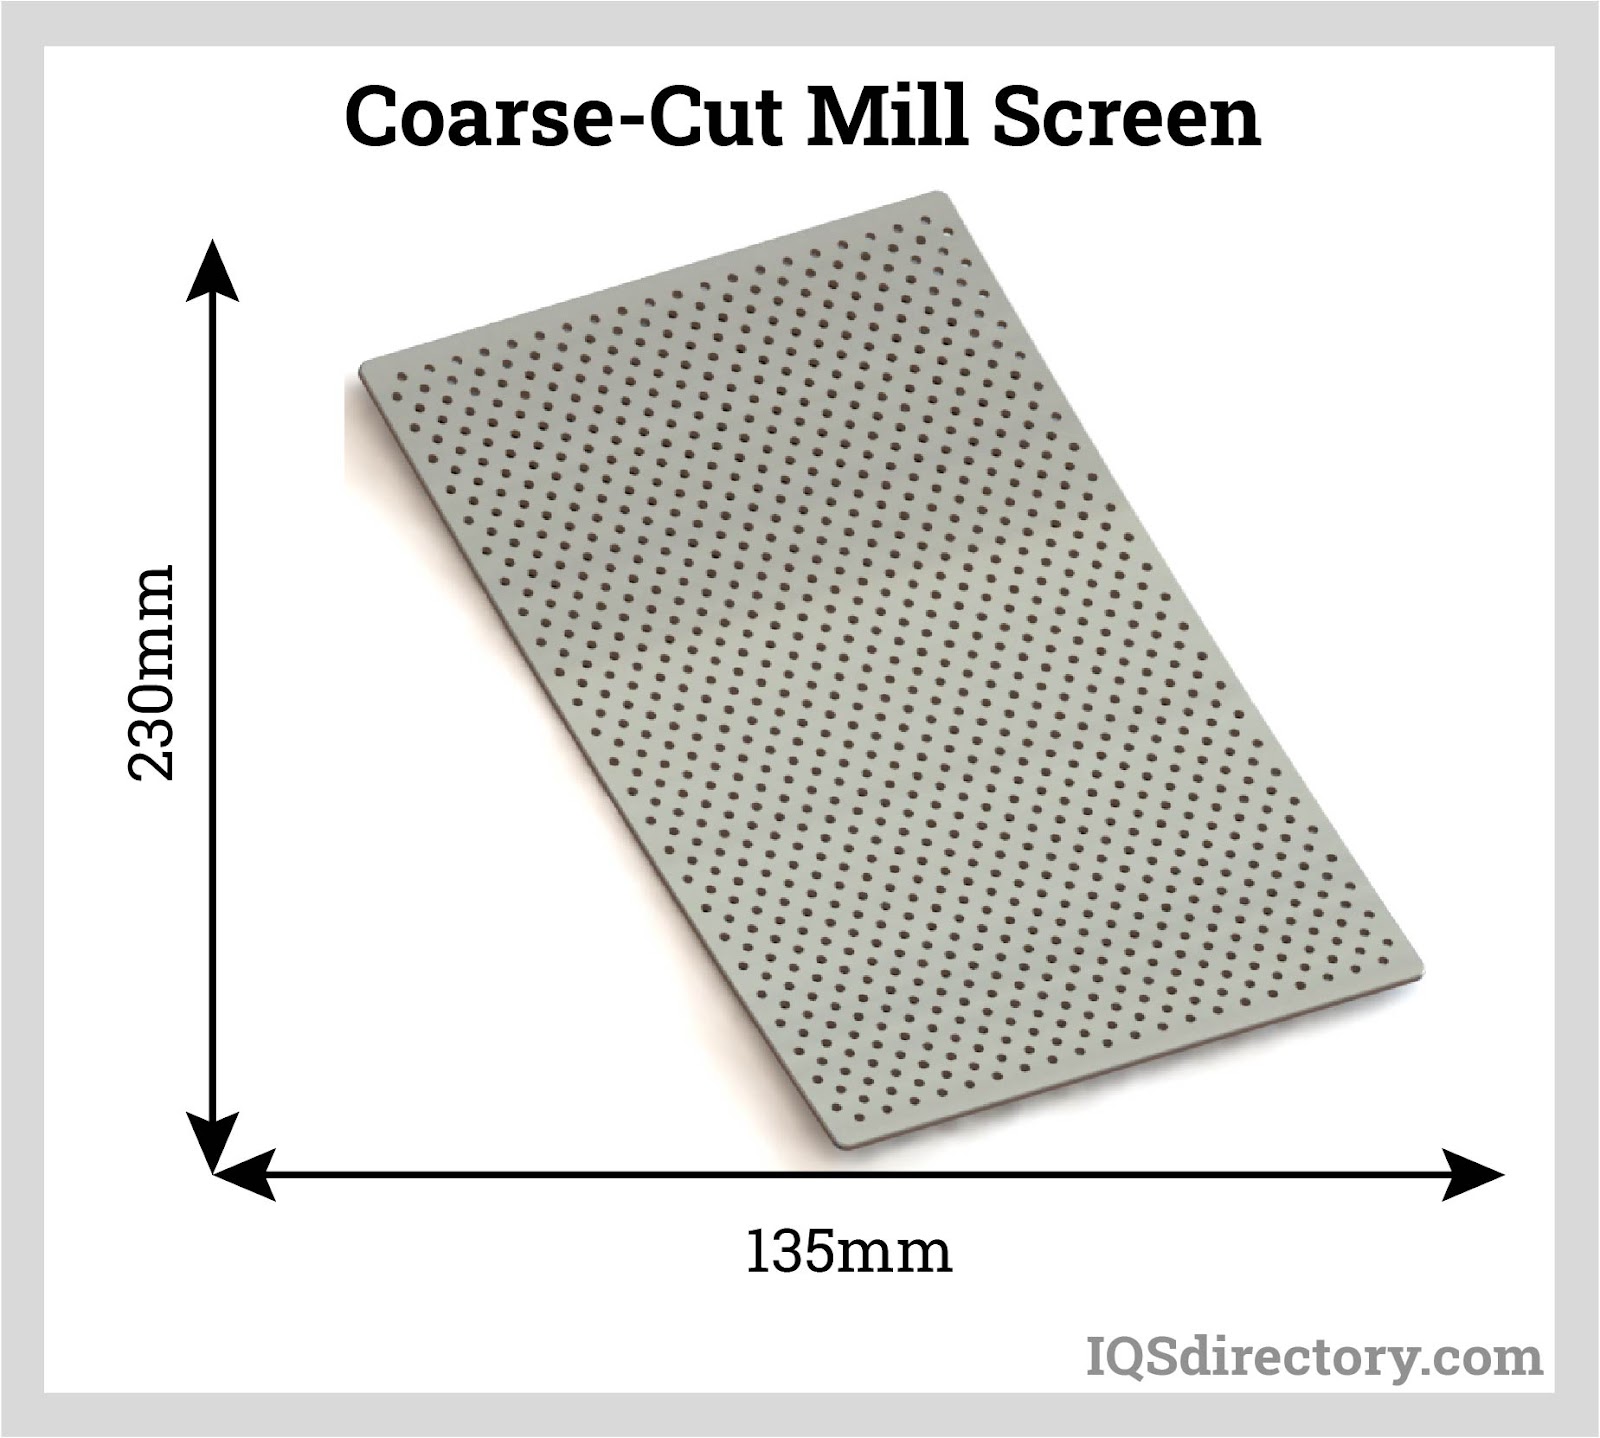 Coarse-Cut Mill Screen